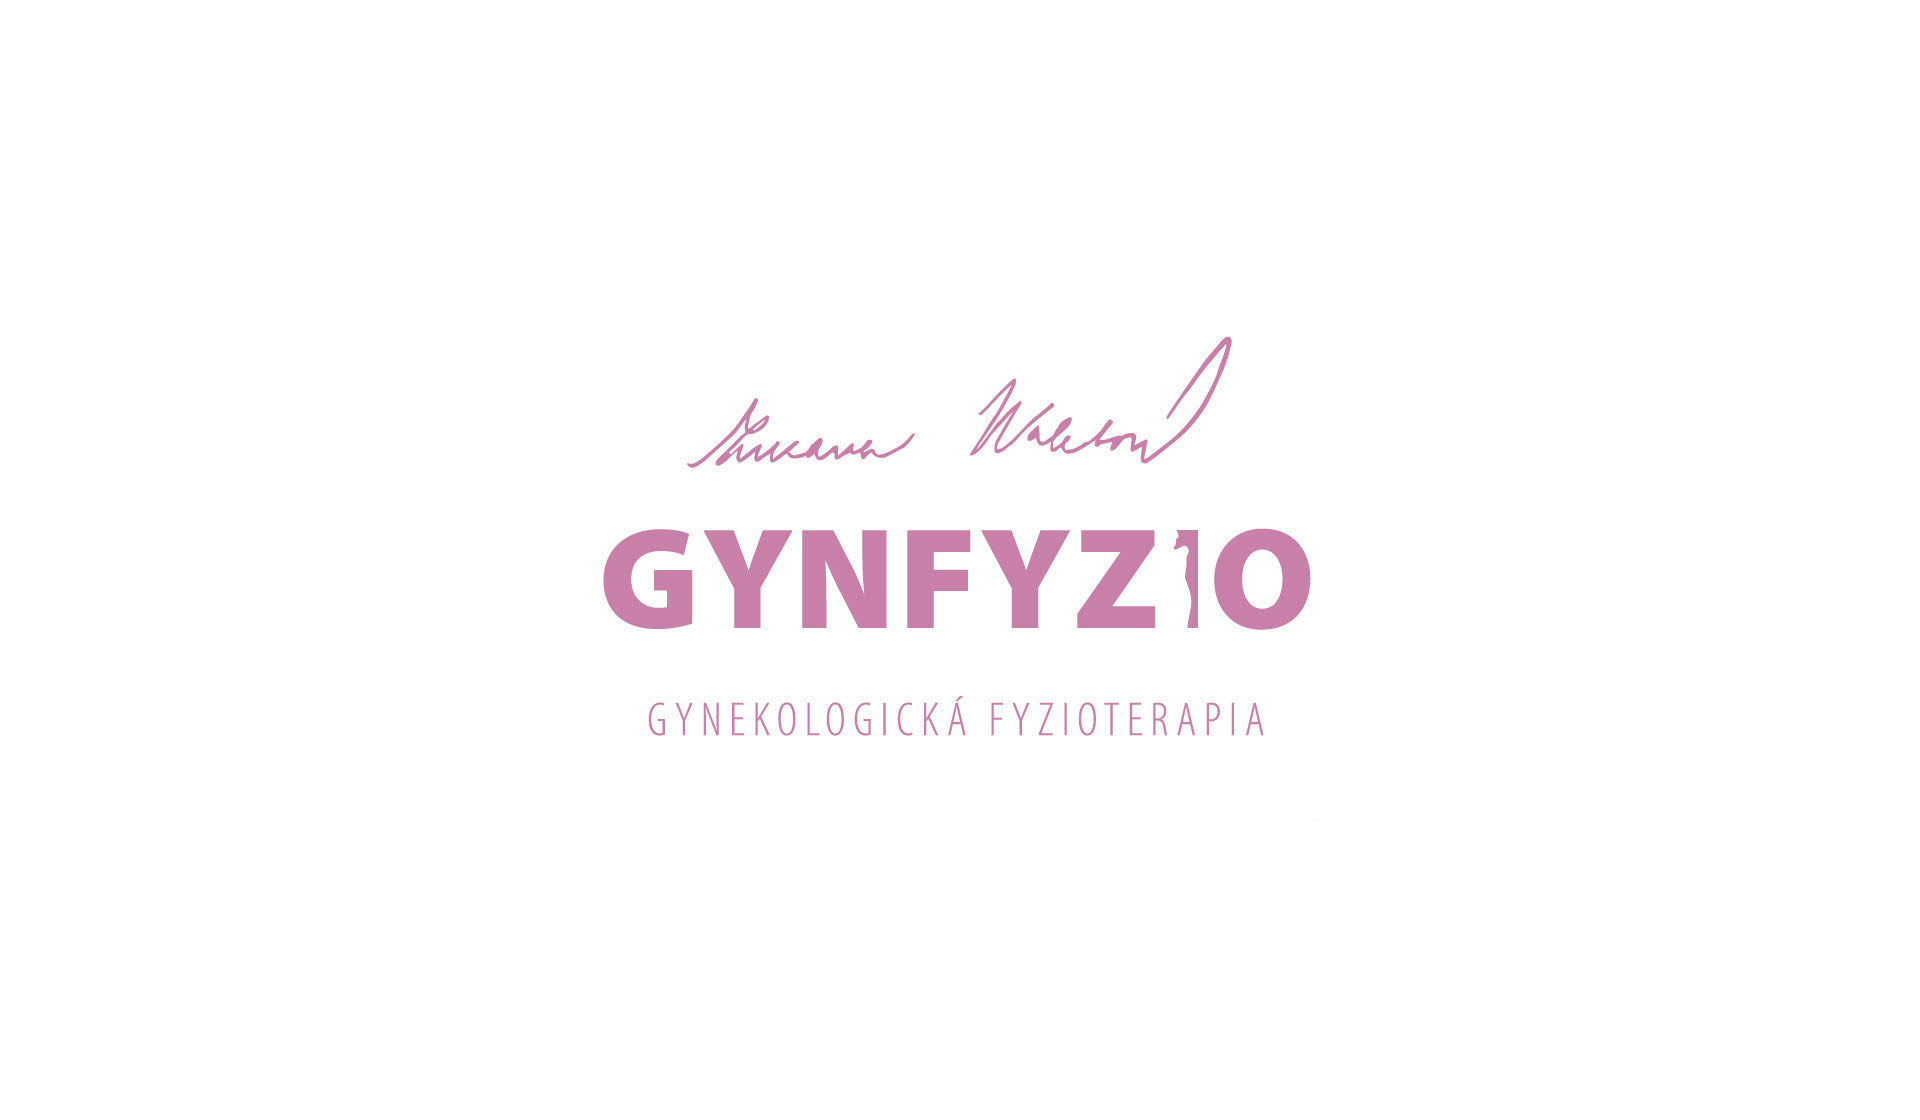 //www.vydumamky.sk/wp-content/uploads/2023/04/gynfyzio.jpeg